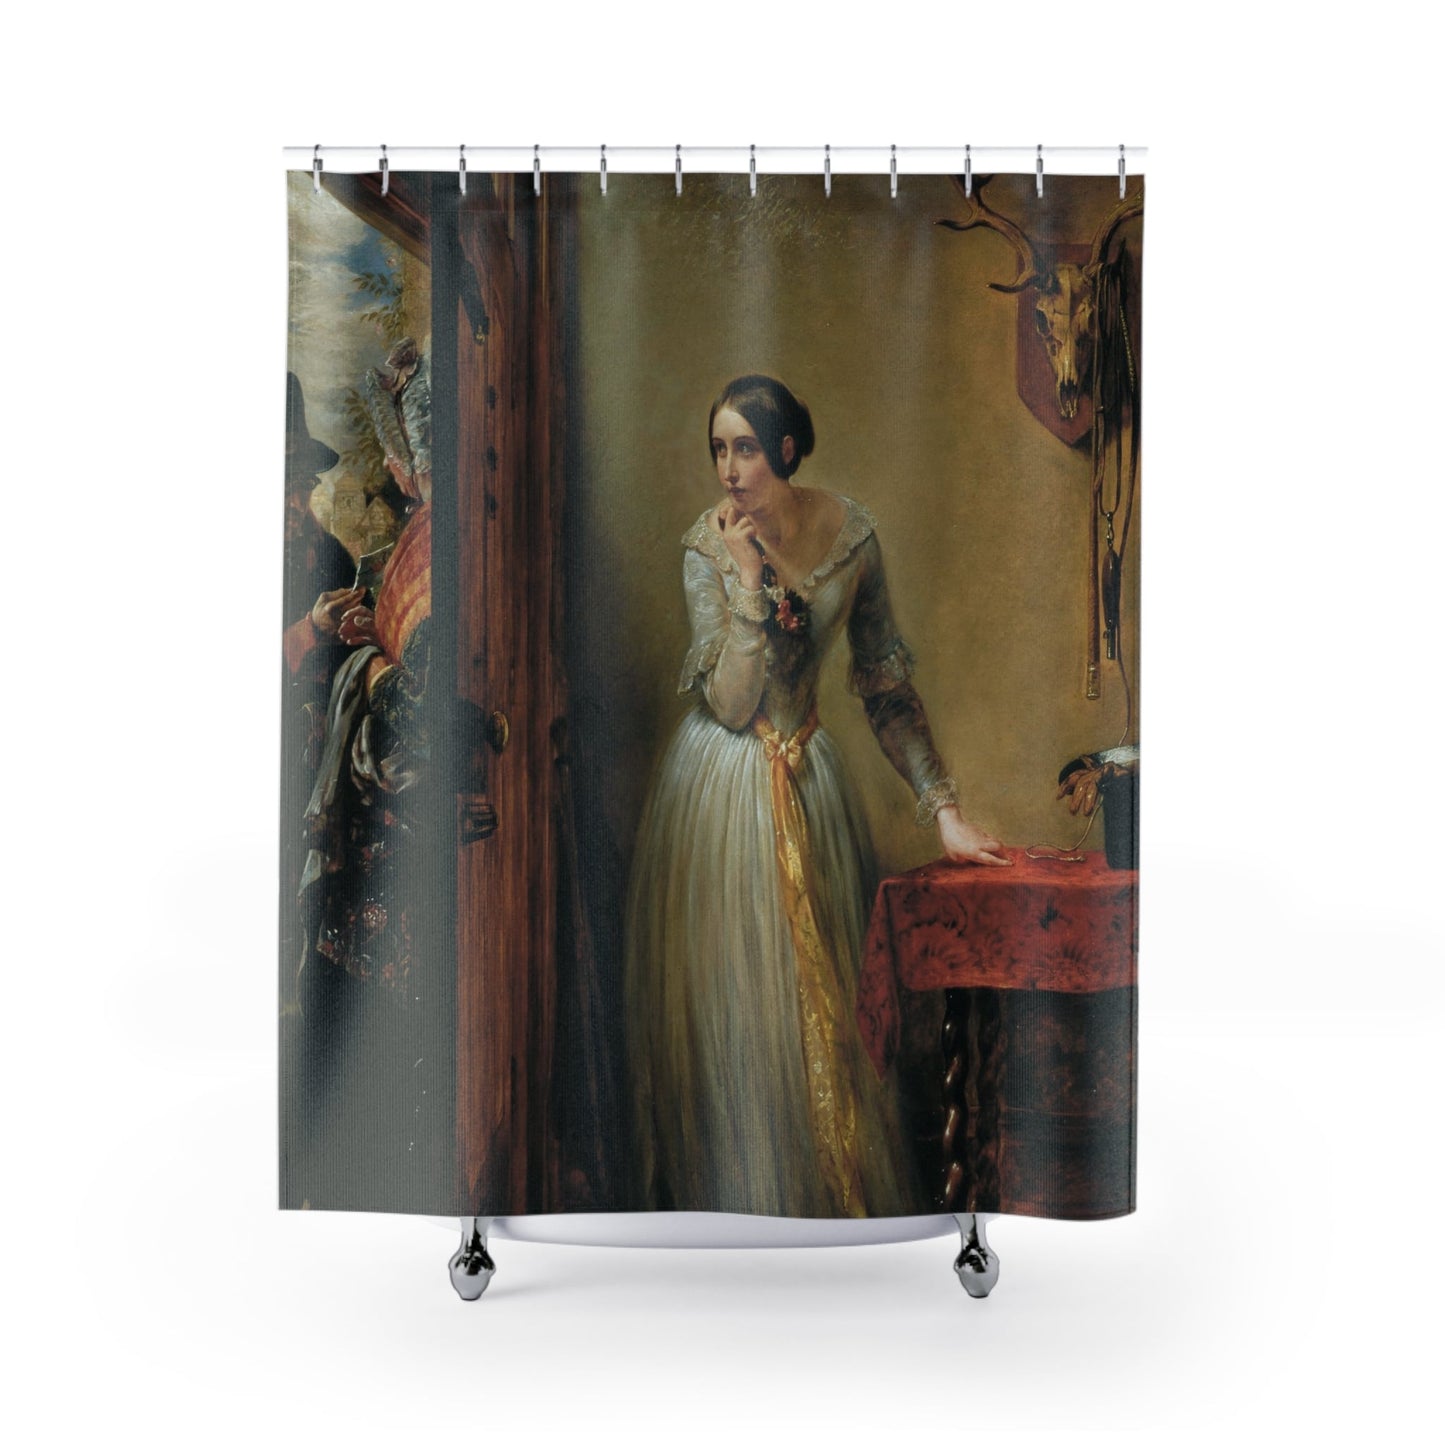 Secretly Waiting Shower Curtain with Victorian era design, historical bathroom decor showcasing Victorian themes.